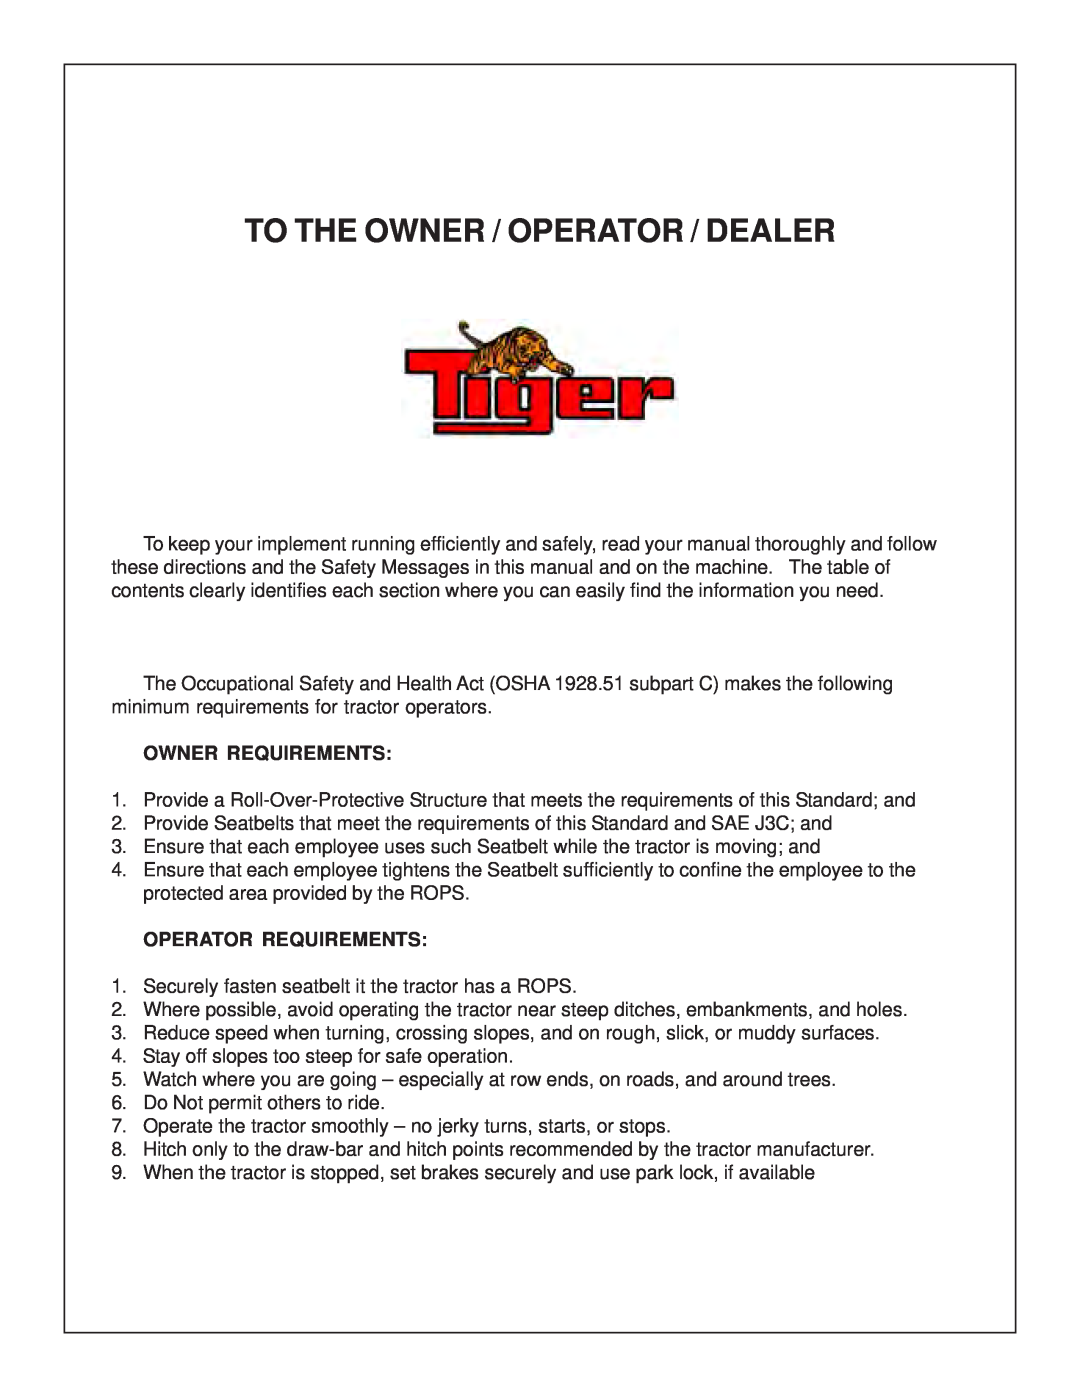 Tiger JD 5101E, JD 5083E, JD 5093E manual To The Owner / Operator / Dealer, Owner Requirements, Operator Requirements 